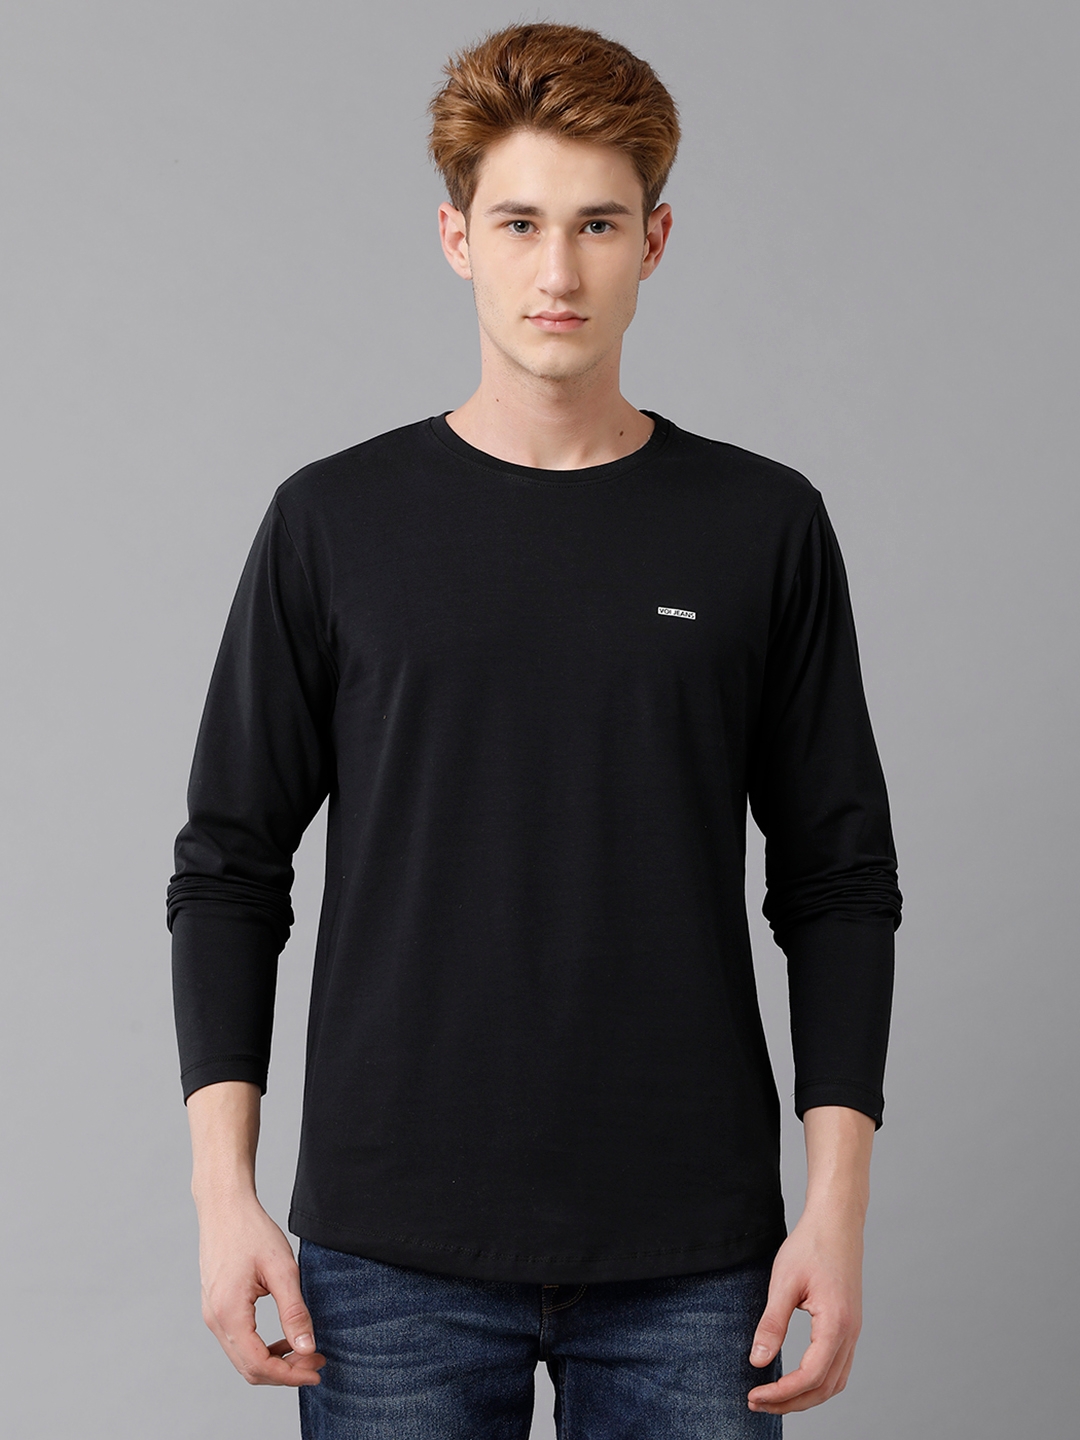 VOI JEANS Men's Solid Black Cotton Blend Full Sleeved T-Shirt